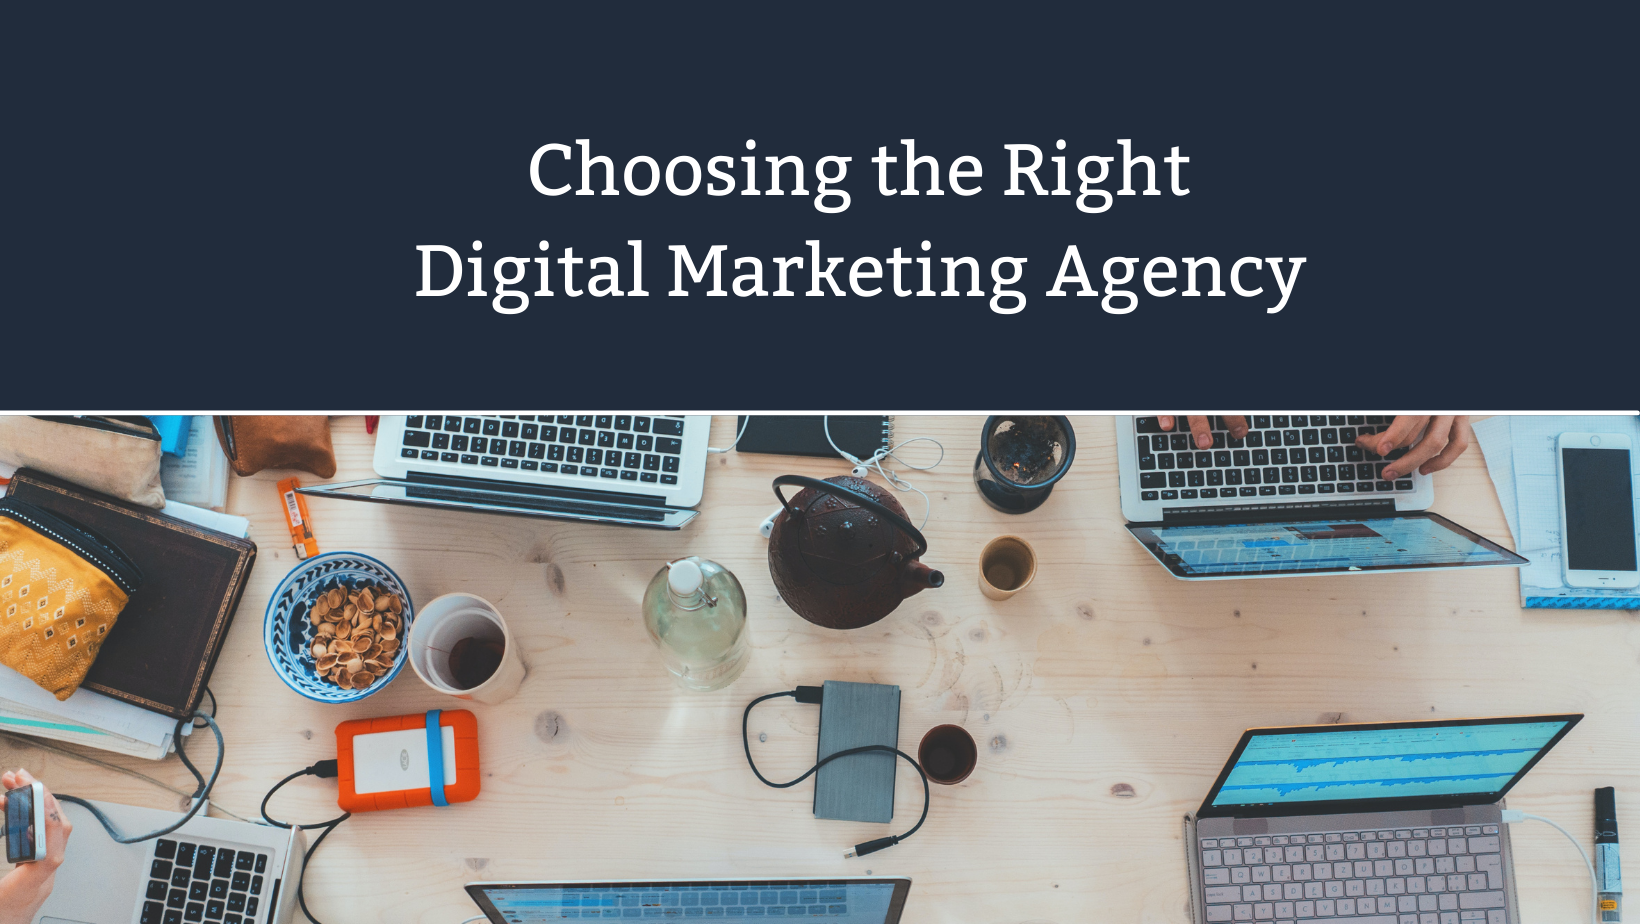 Choosing the right digital marketing agency